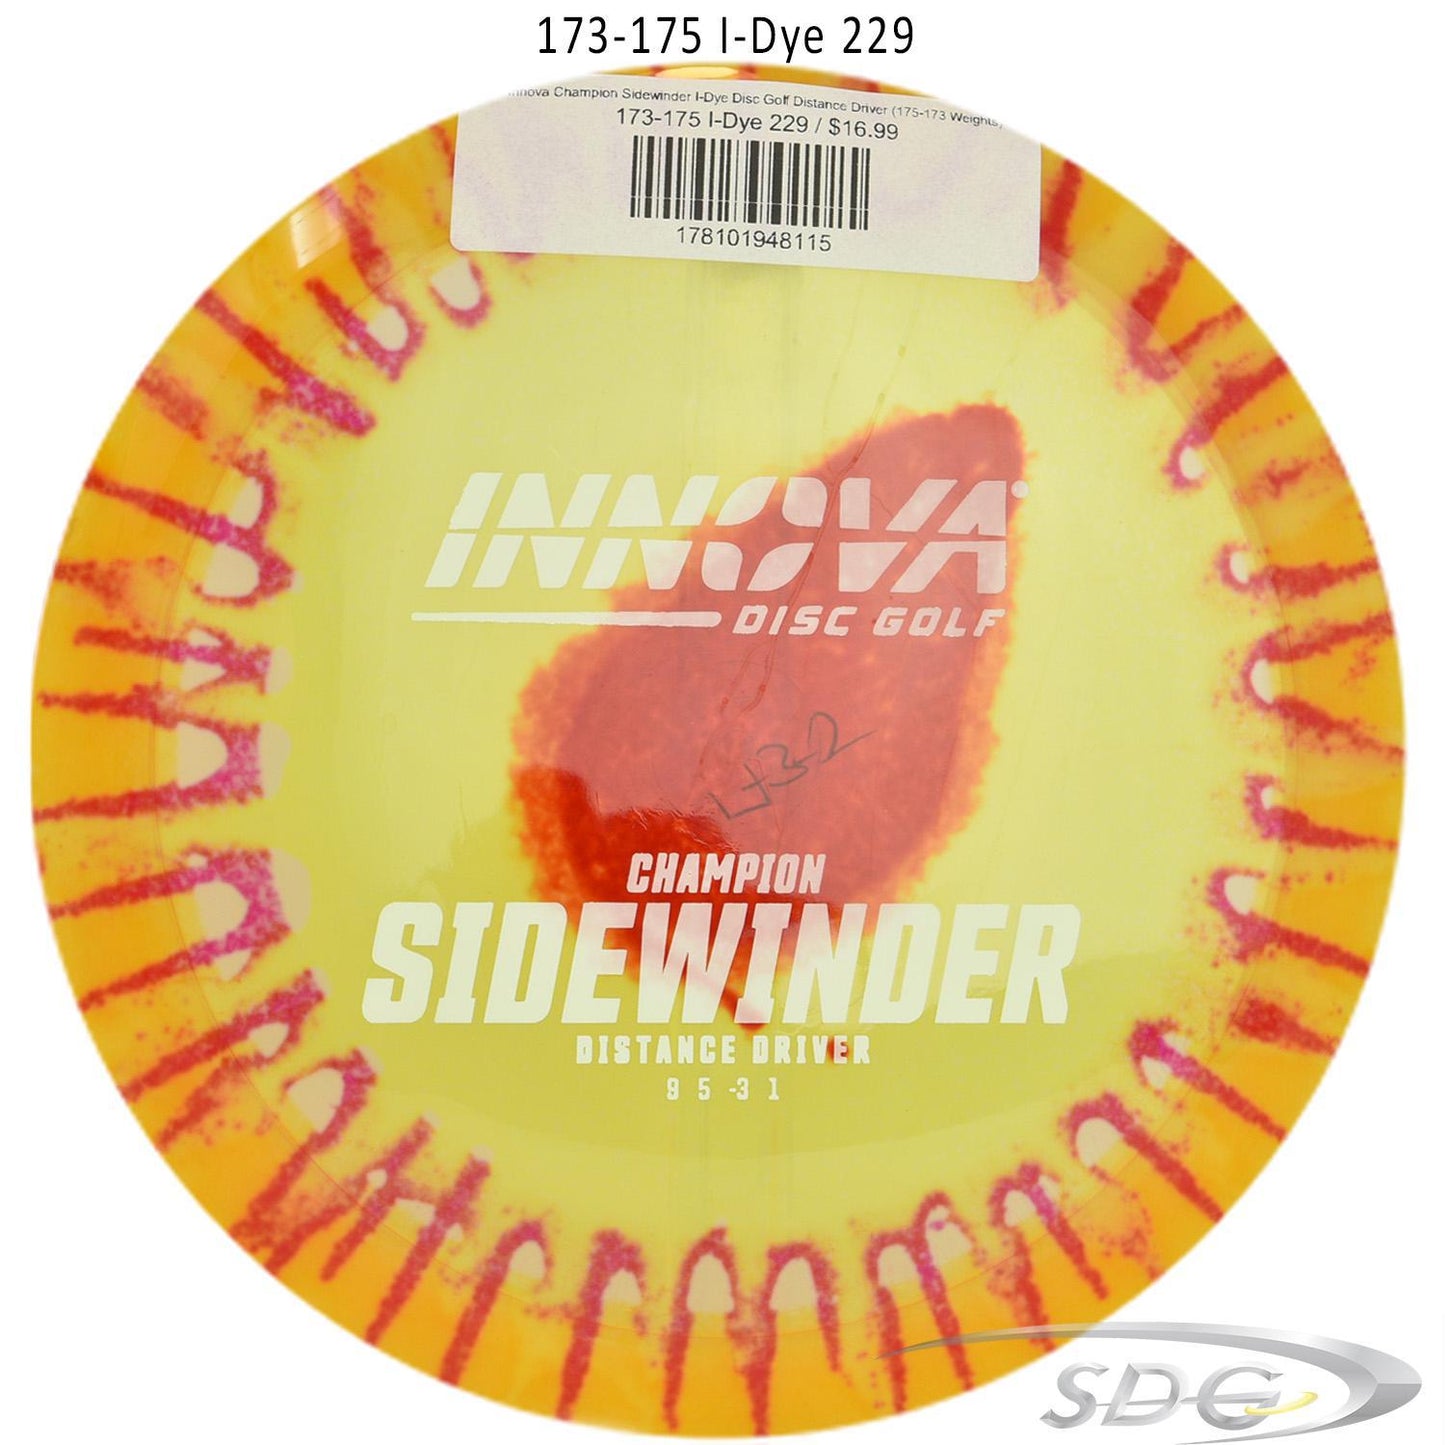 innova-champion-sidewinder-i-dye-disc-golf-distance-driver 173-175 I-Dye 229 